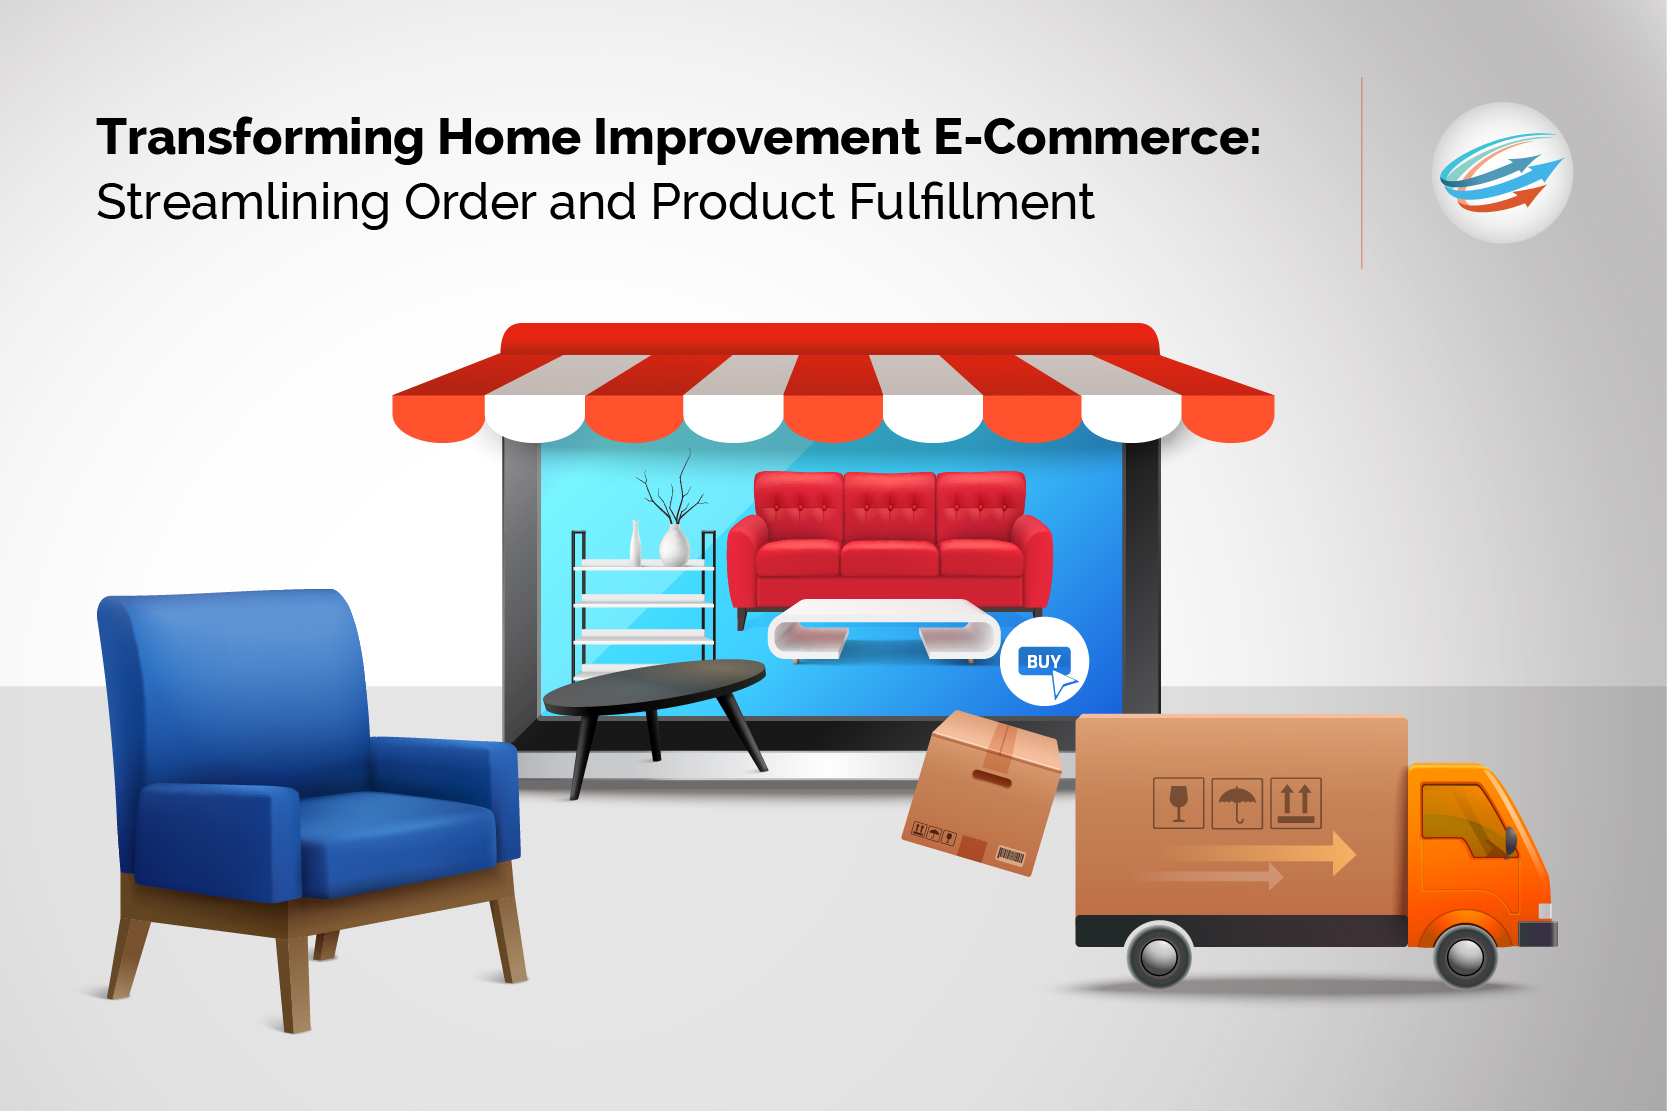 Home Improvement E-Commerce